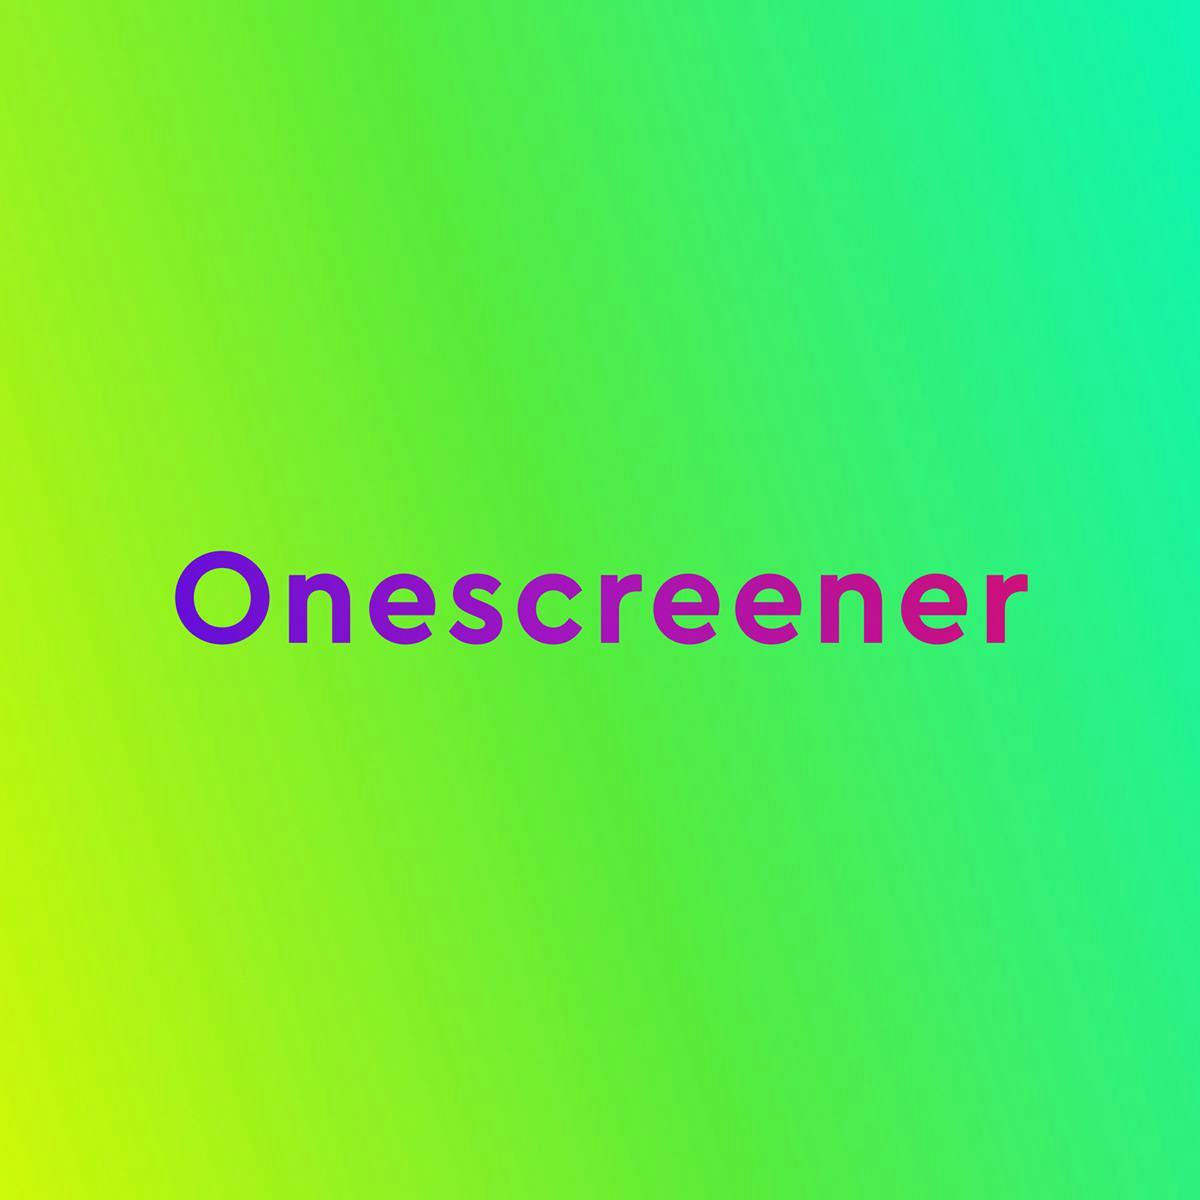 Onescreener by FOND Design